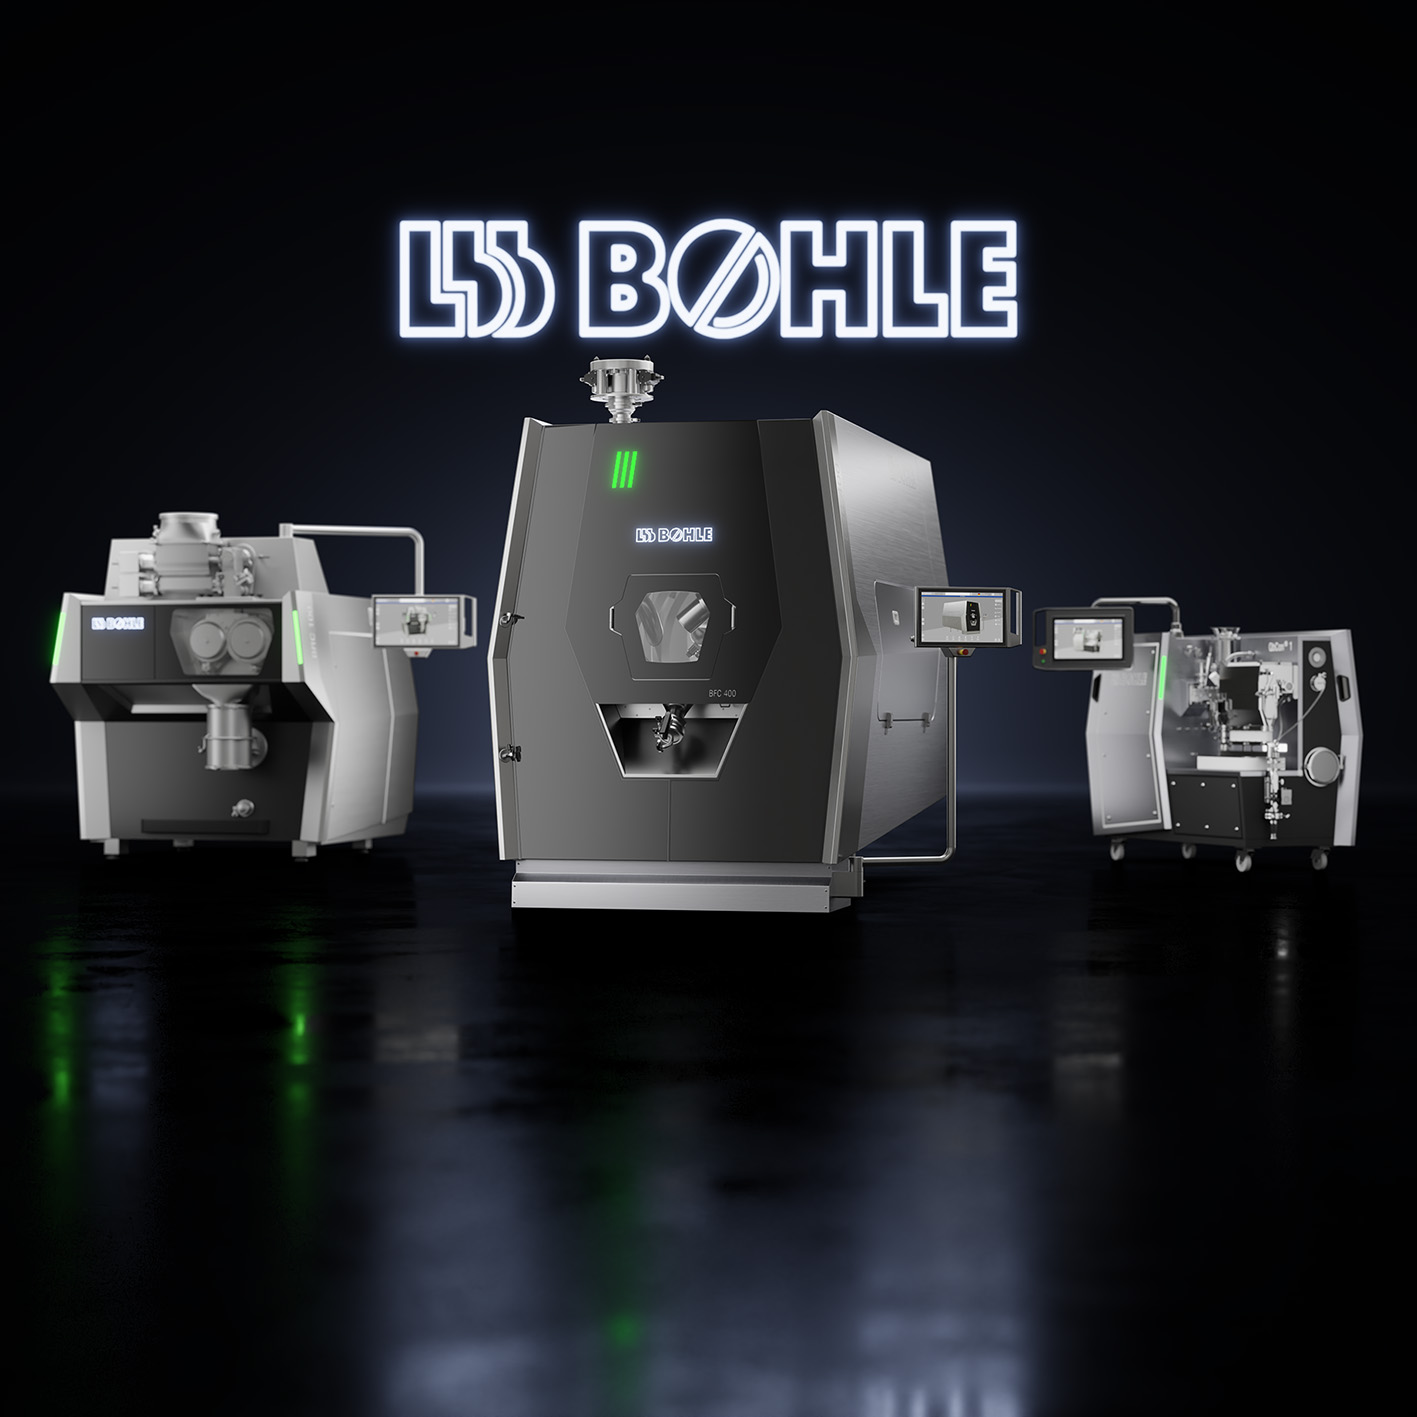 New generation L.B. Bohle machines nominated for German Design Award